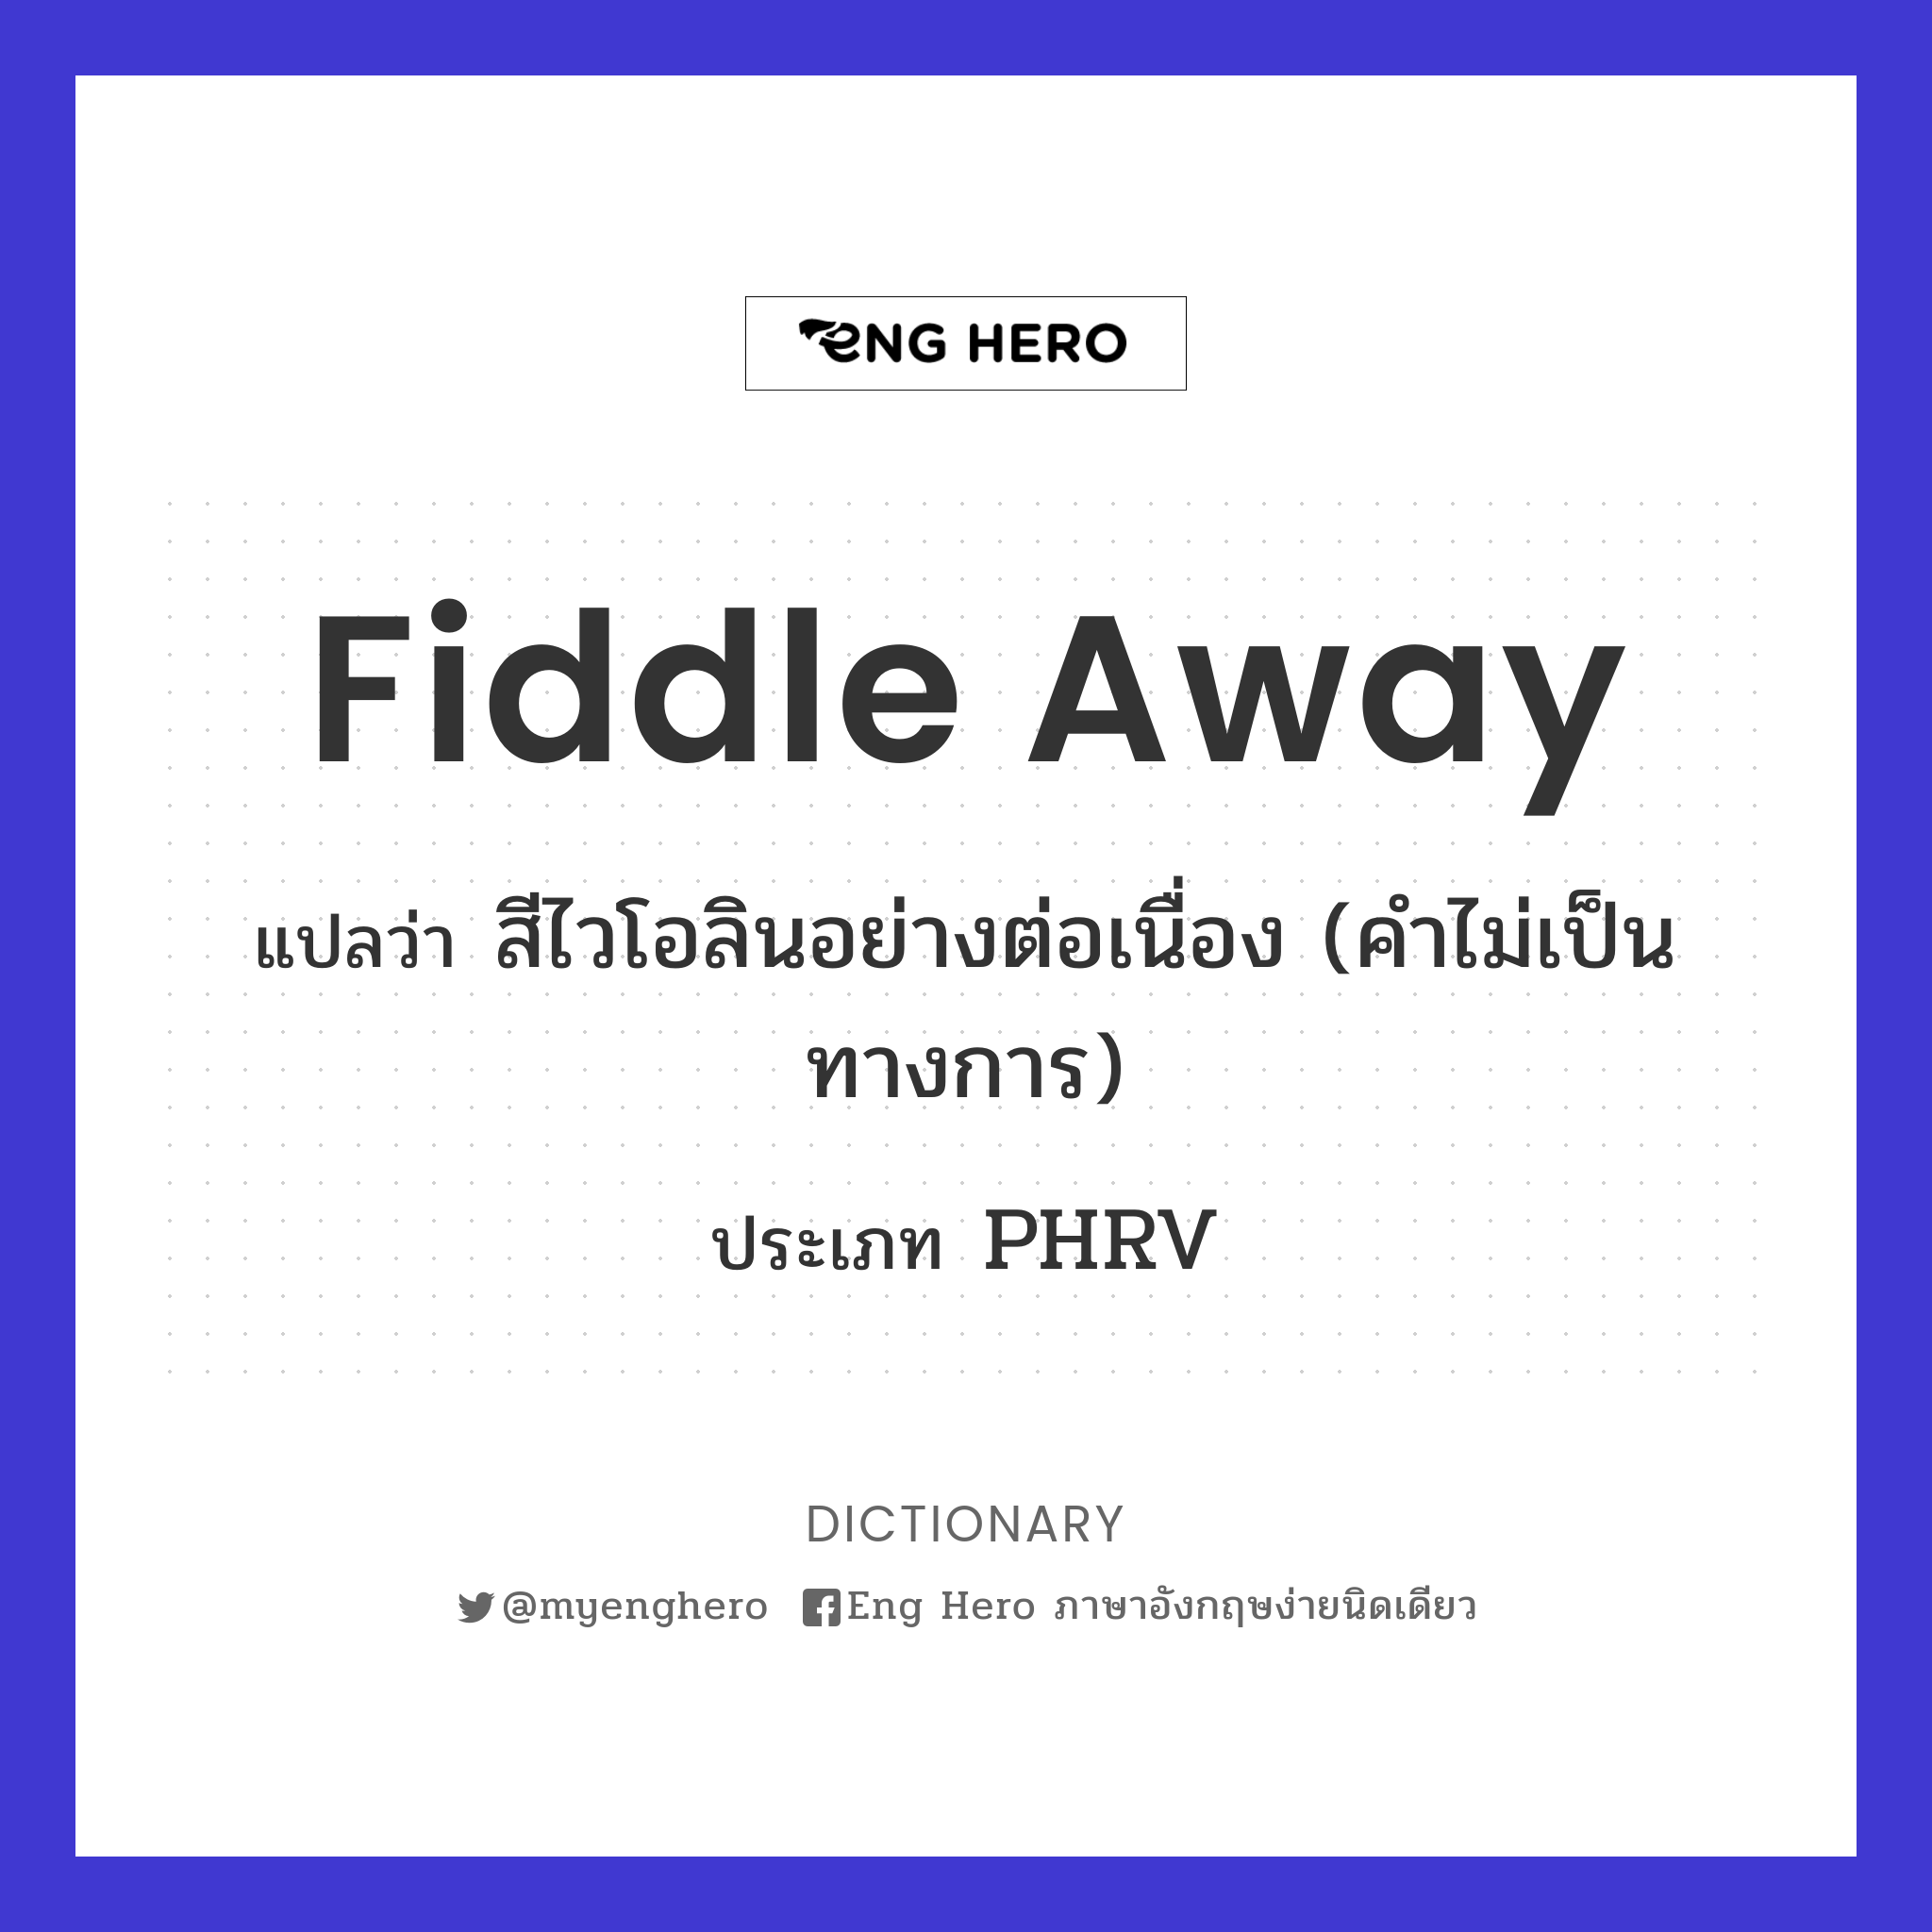 fiddle away